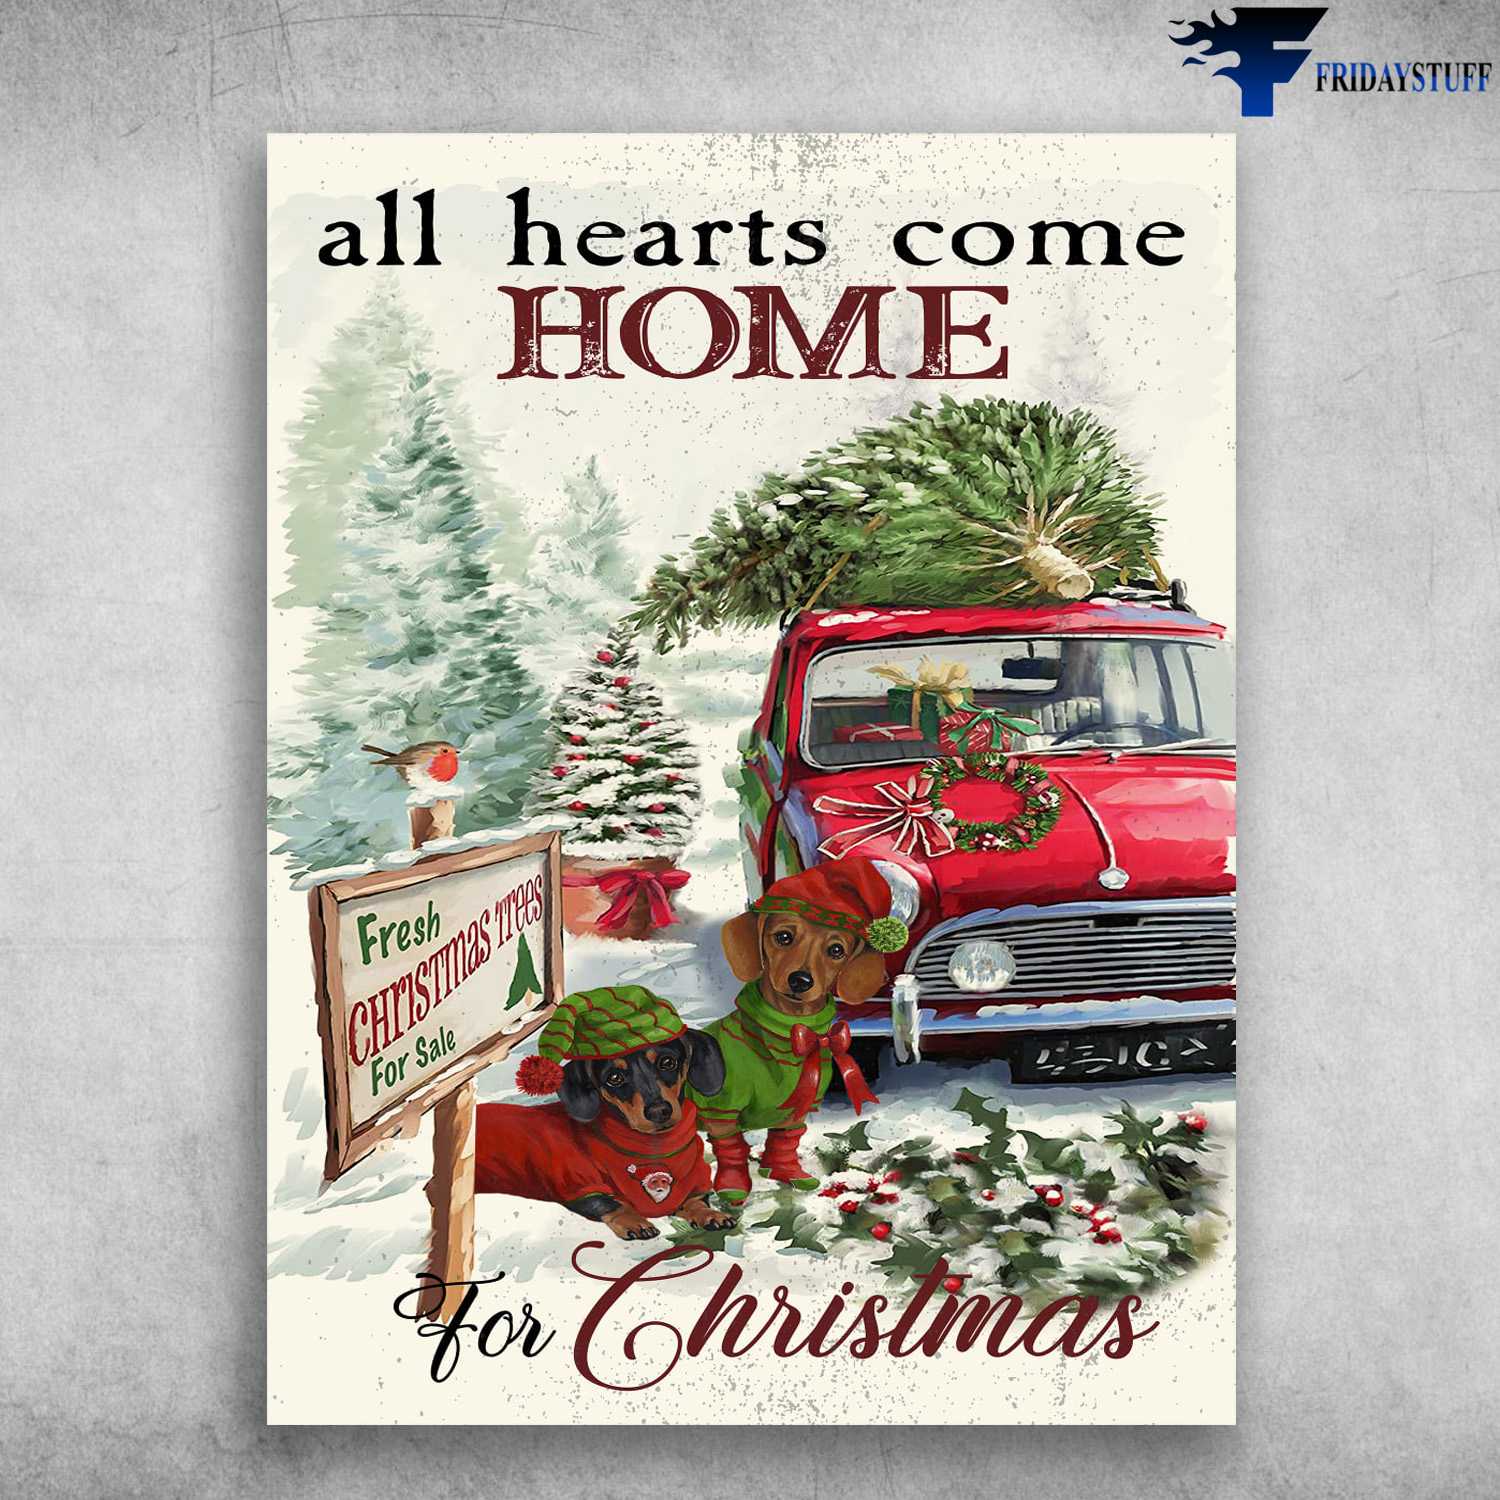 Dachshund Dog, Christmas Poster - All Hearts Come Home, For Christmas, Fresh Christmas Trees For Sale